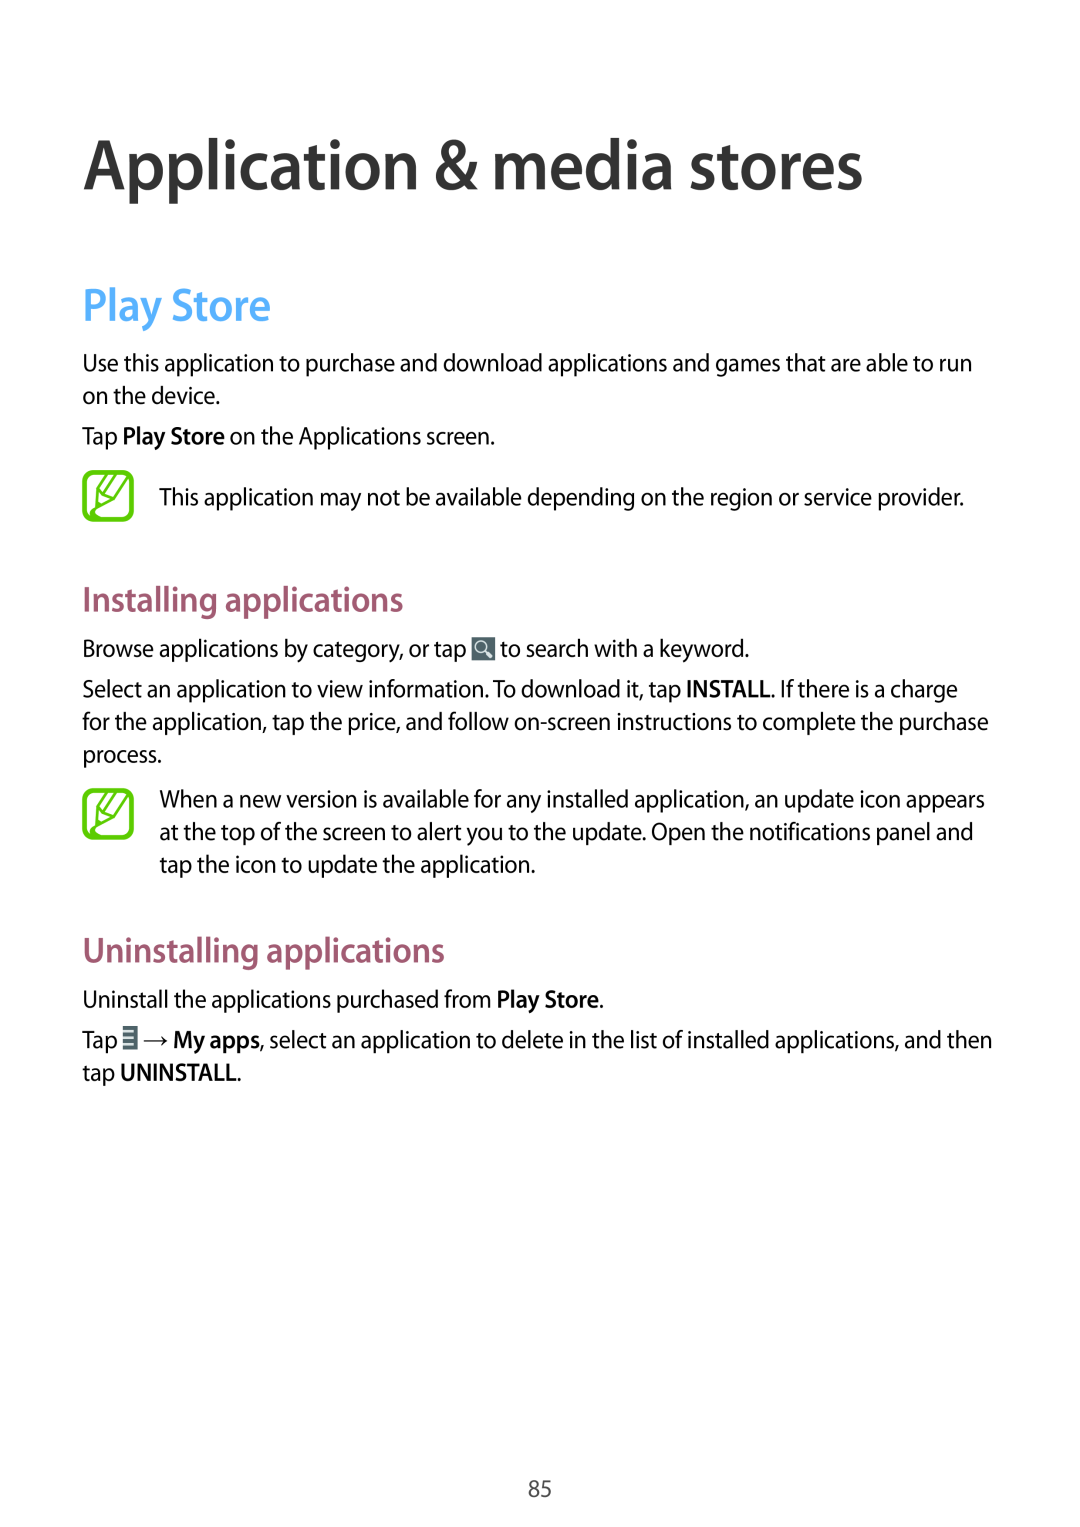 Samsung GT-I9305RWDVD2 manual Application & media stores, Play Store, Installing applications, Uninstalling applications 